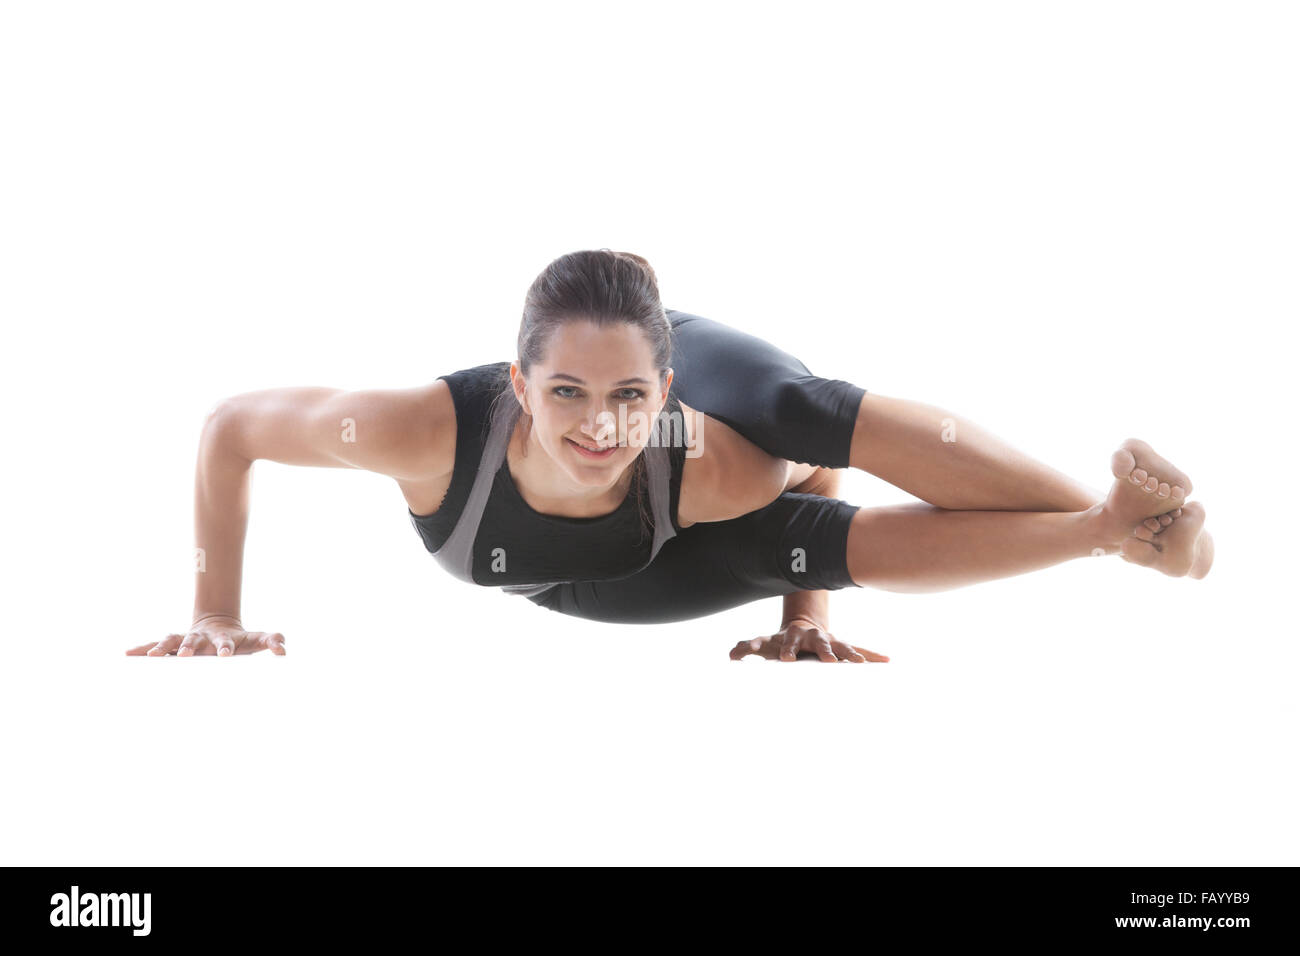 Yoga sportif fille sur fond blanc doing handstand push-ups Banque D'Images